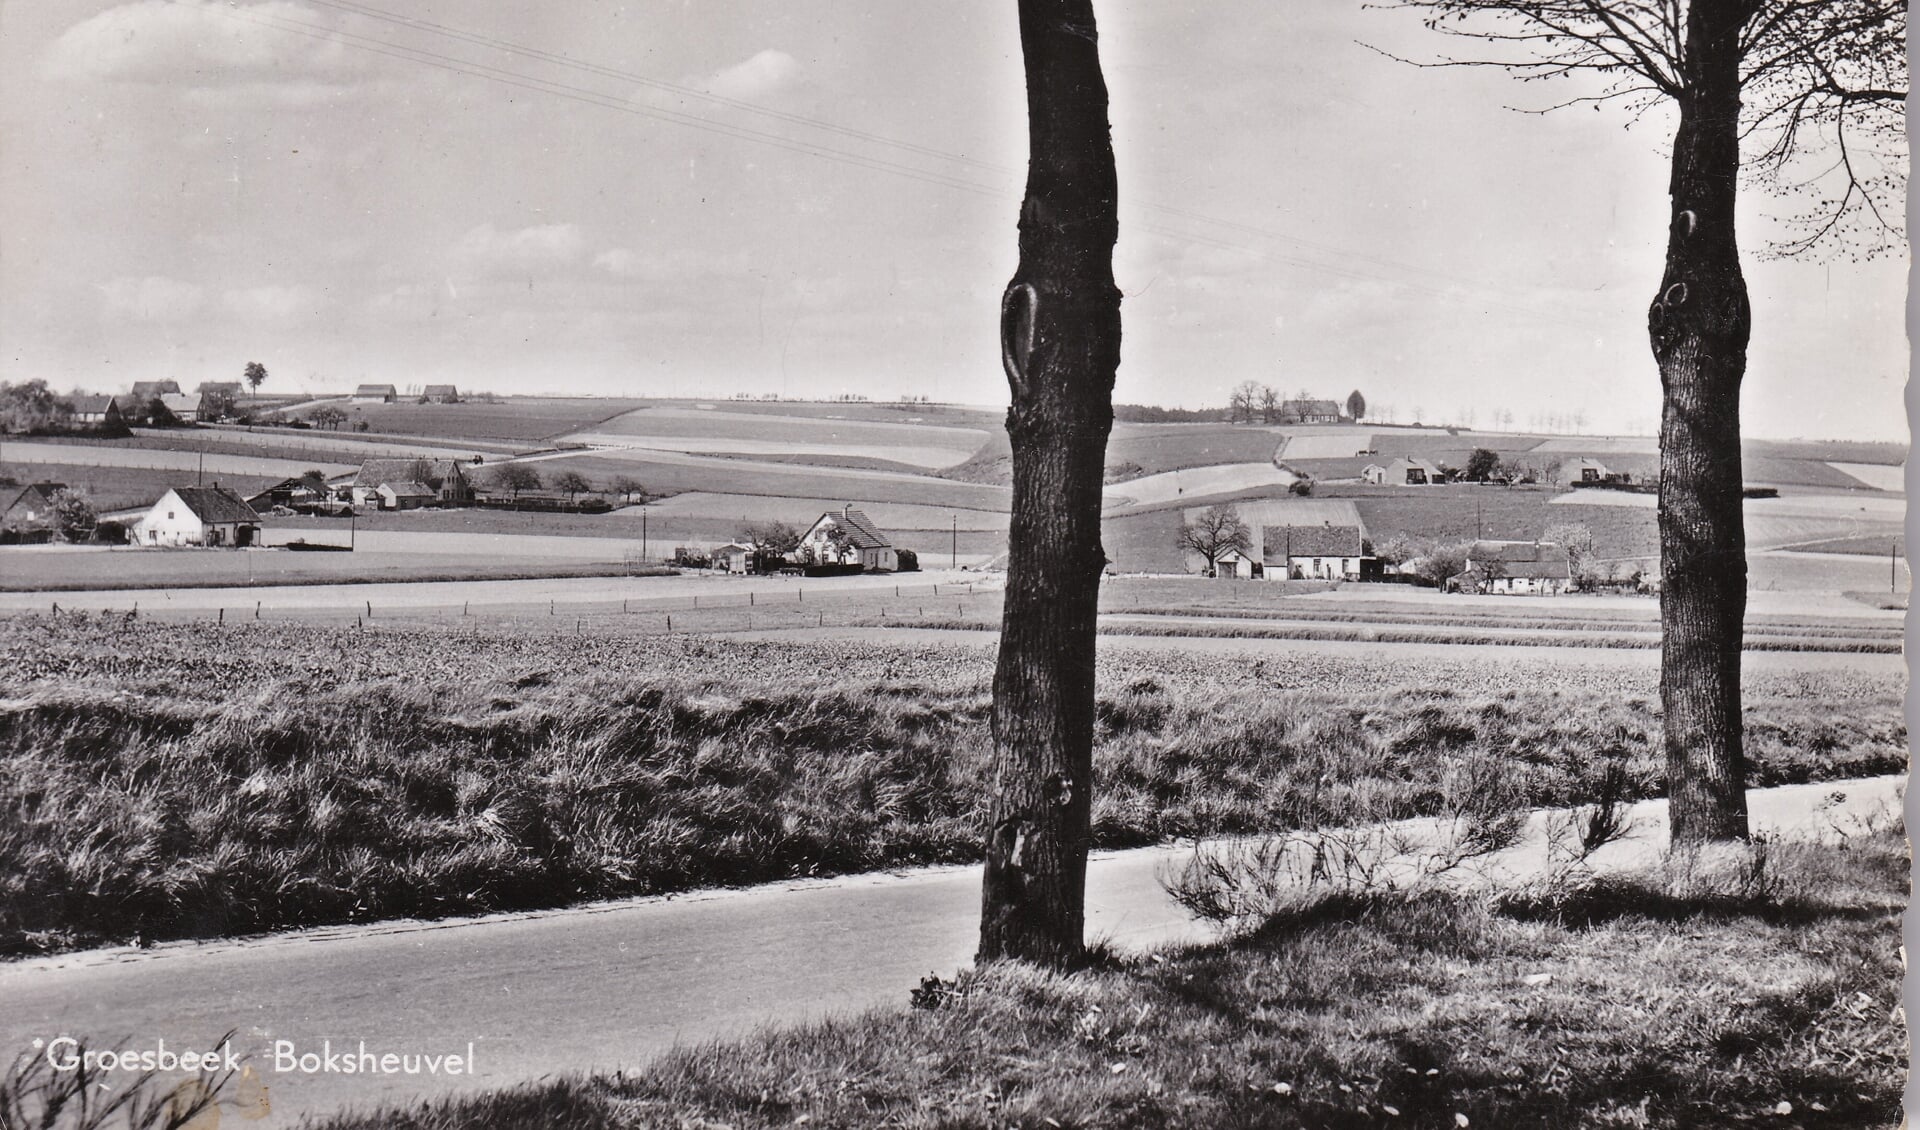 Ansichtkaart circa 1955, collectie G.G.D.